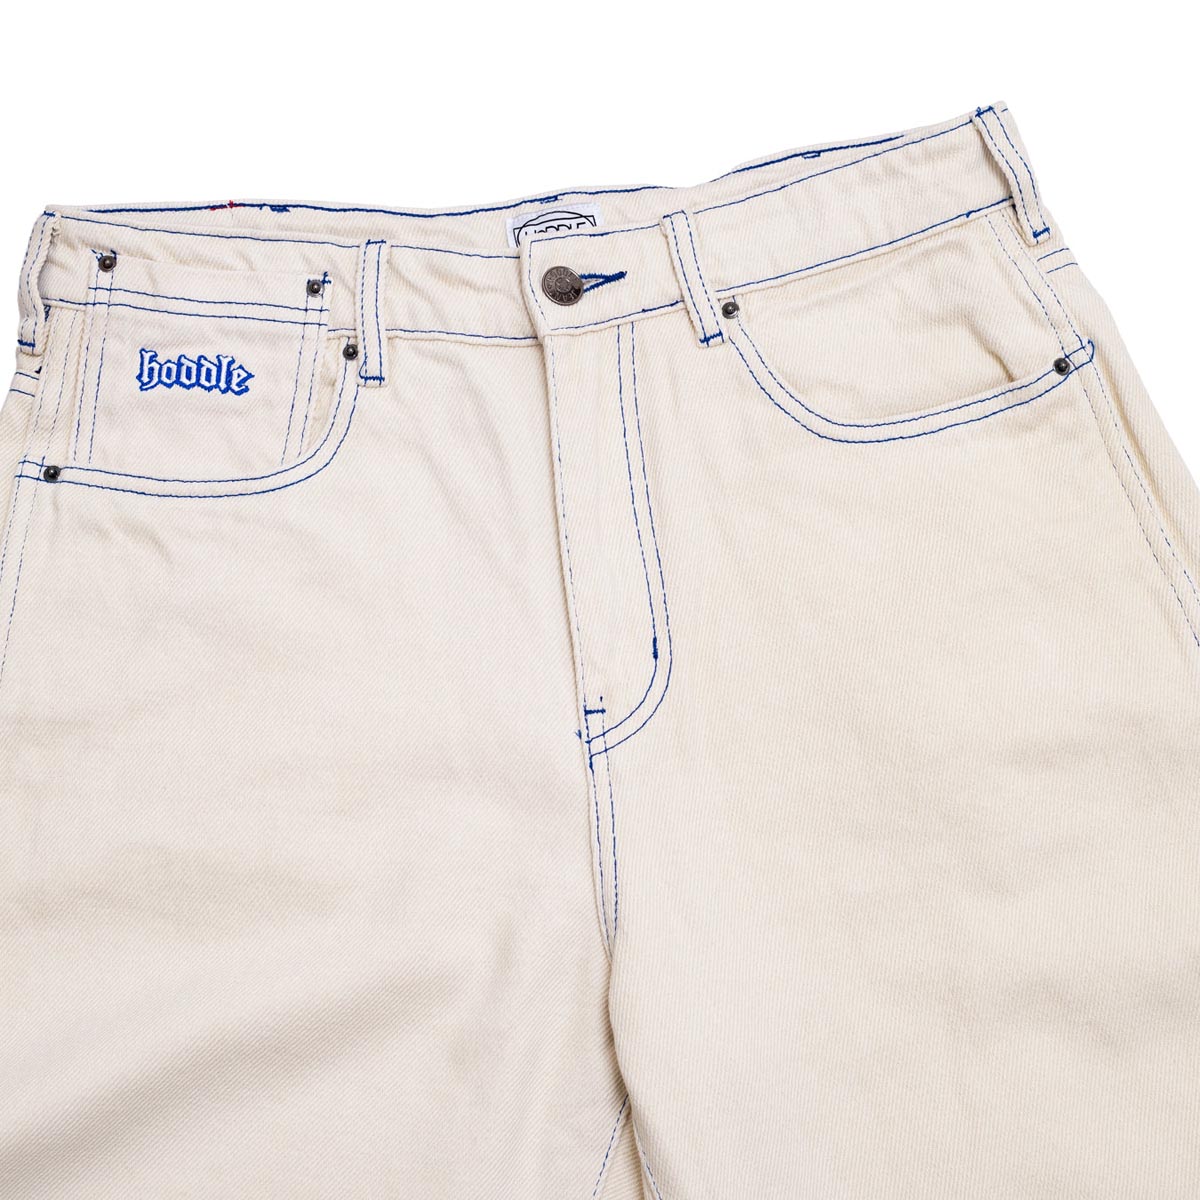 Hoddle 16o Denim Ranger Jeans - White/Blue Stich image 5